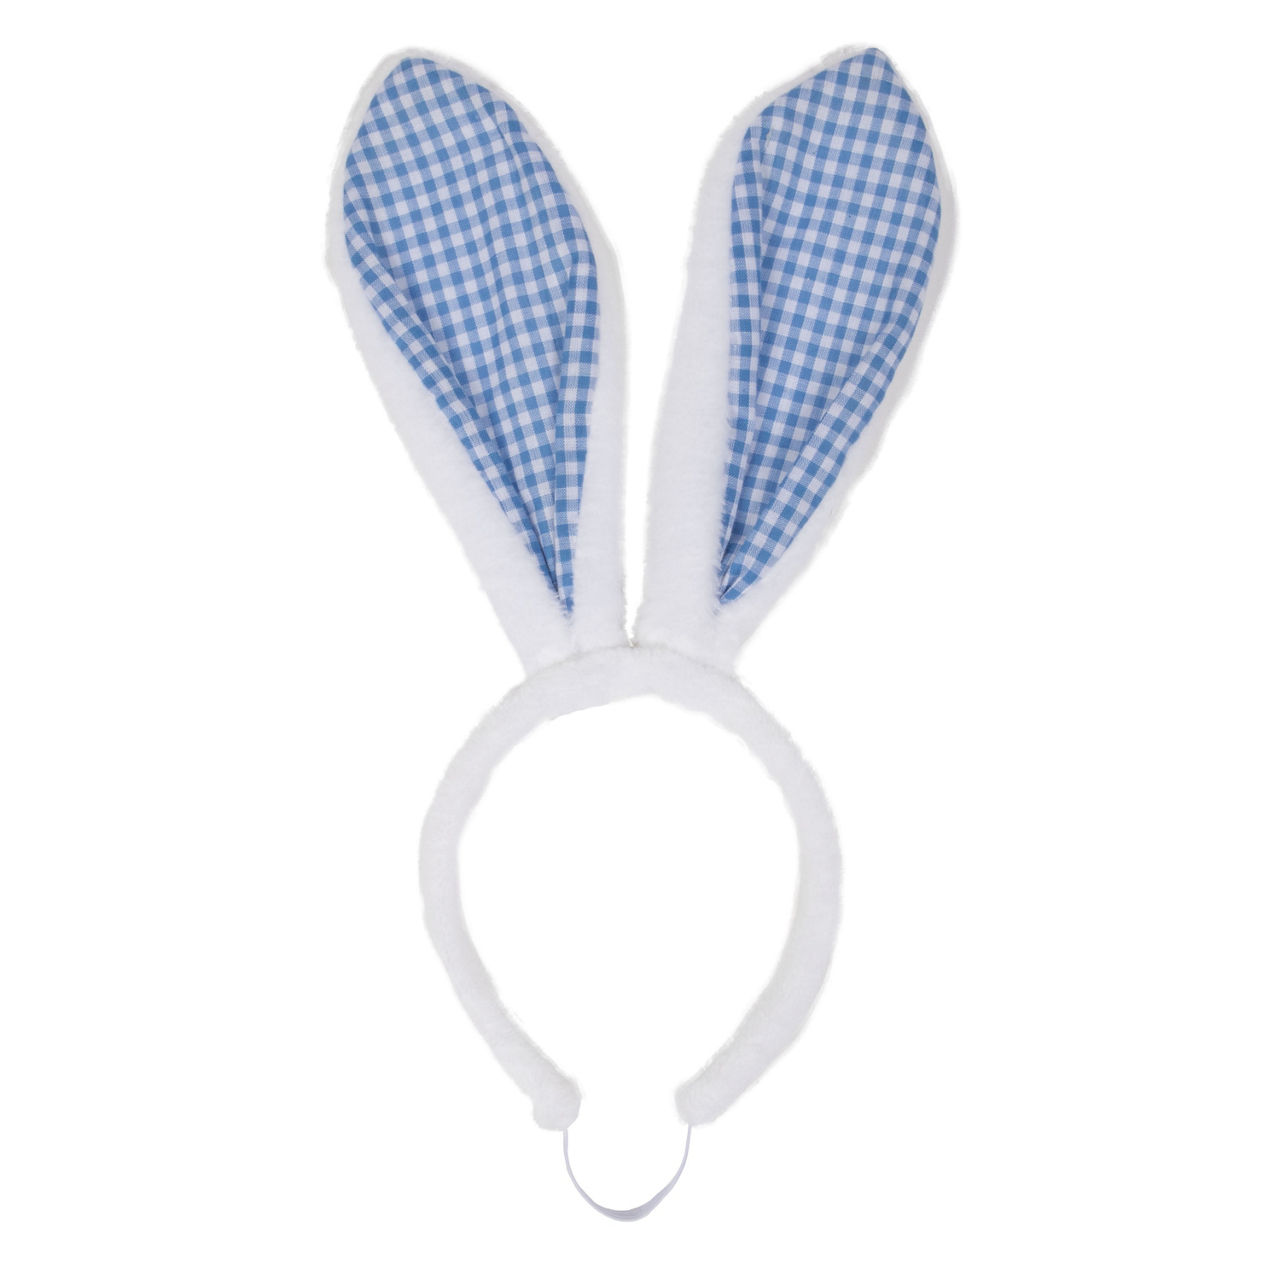 Pet Large White & Blue Gingham Fuzzy Bunny Ear Headband